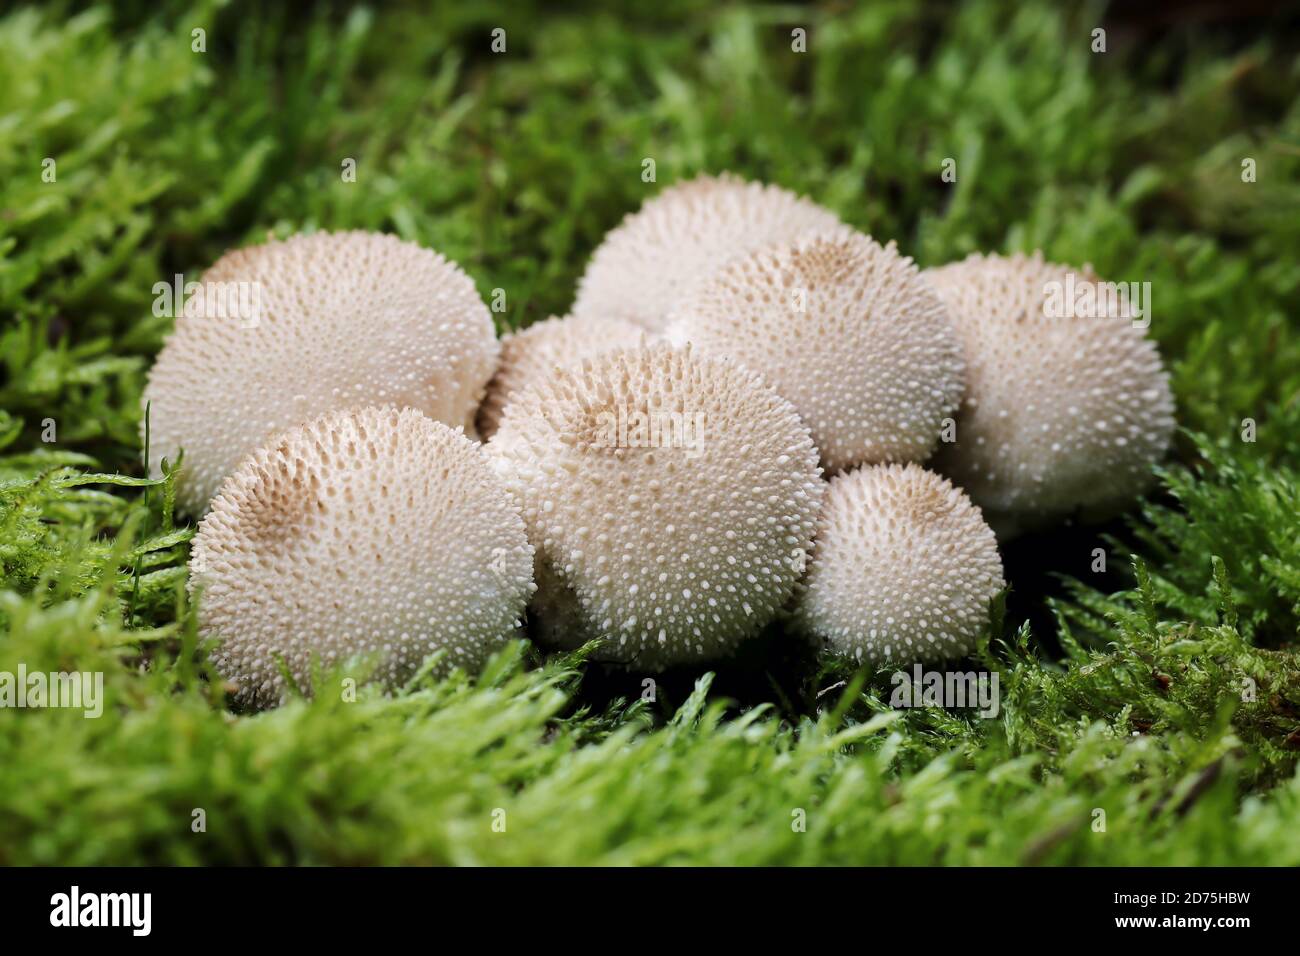 A nest of Common Puffballs, Lycoperdon perlatum, young specimens are considered a good edible mushroom. Stock Photo